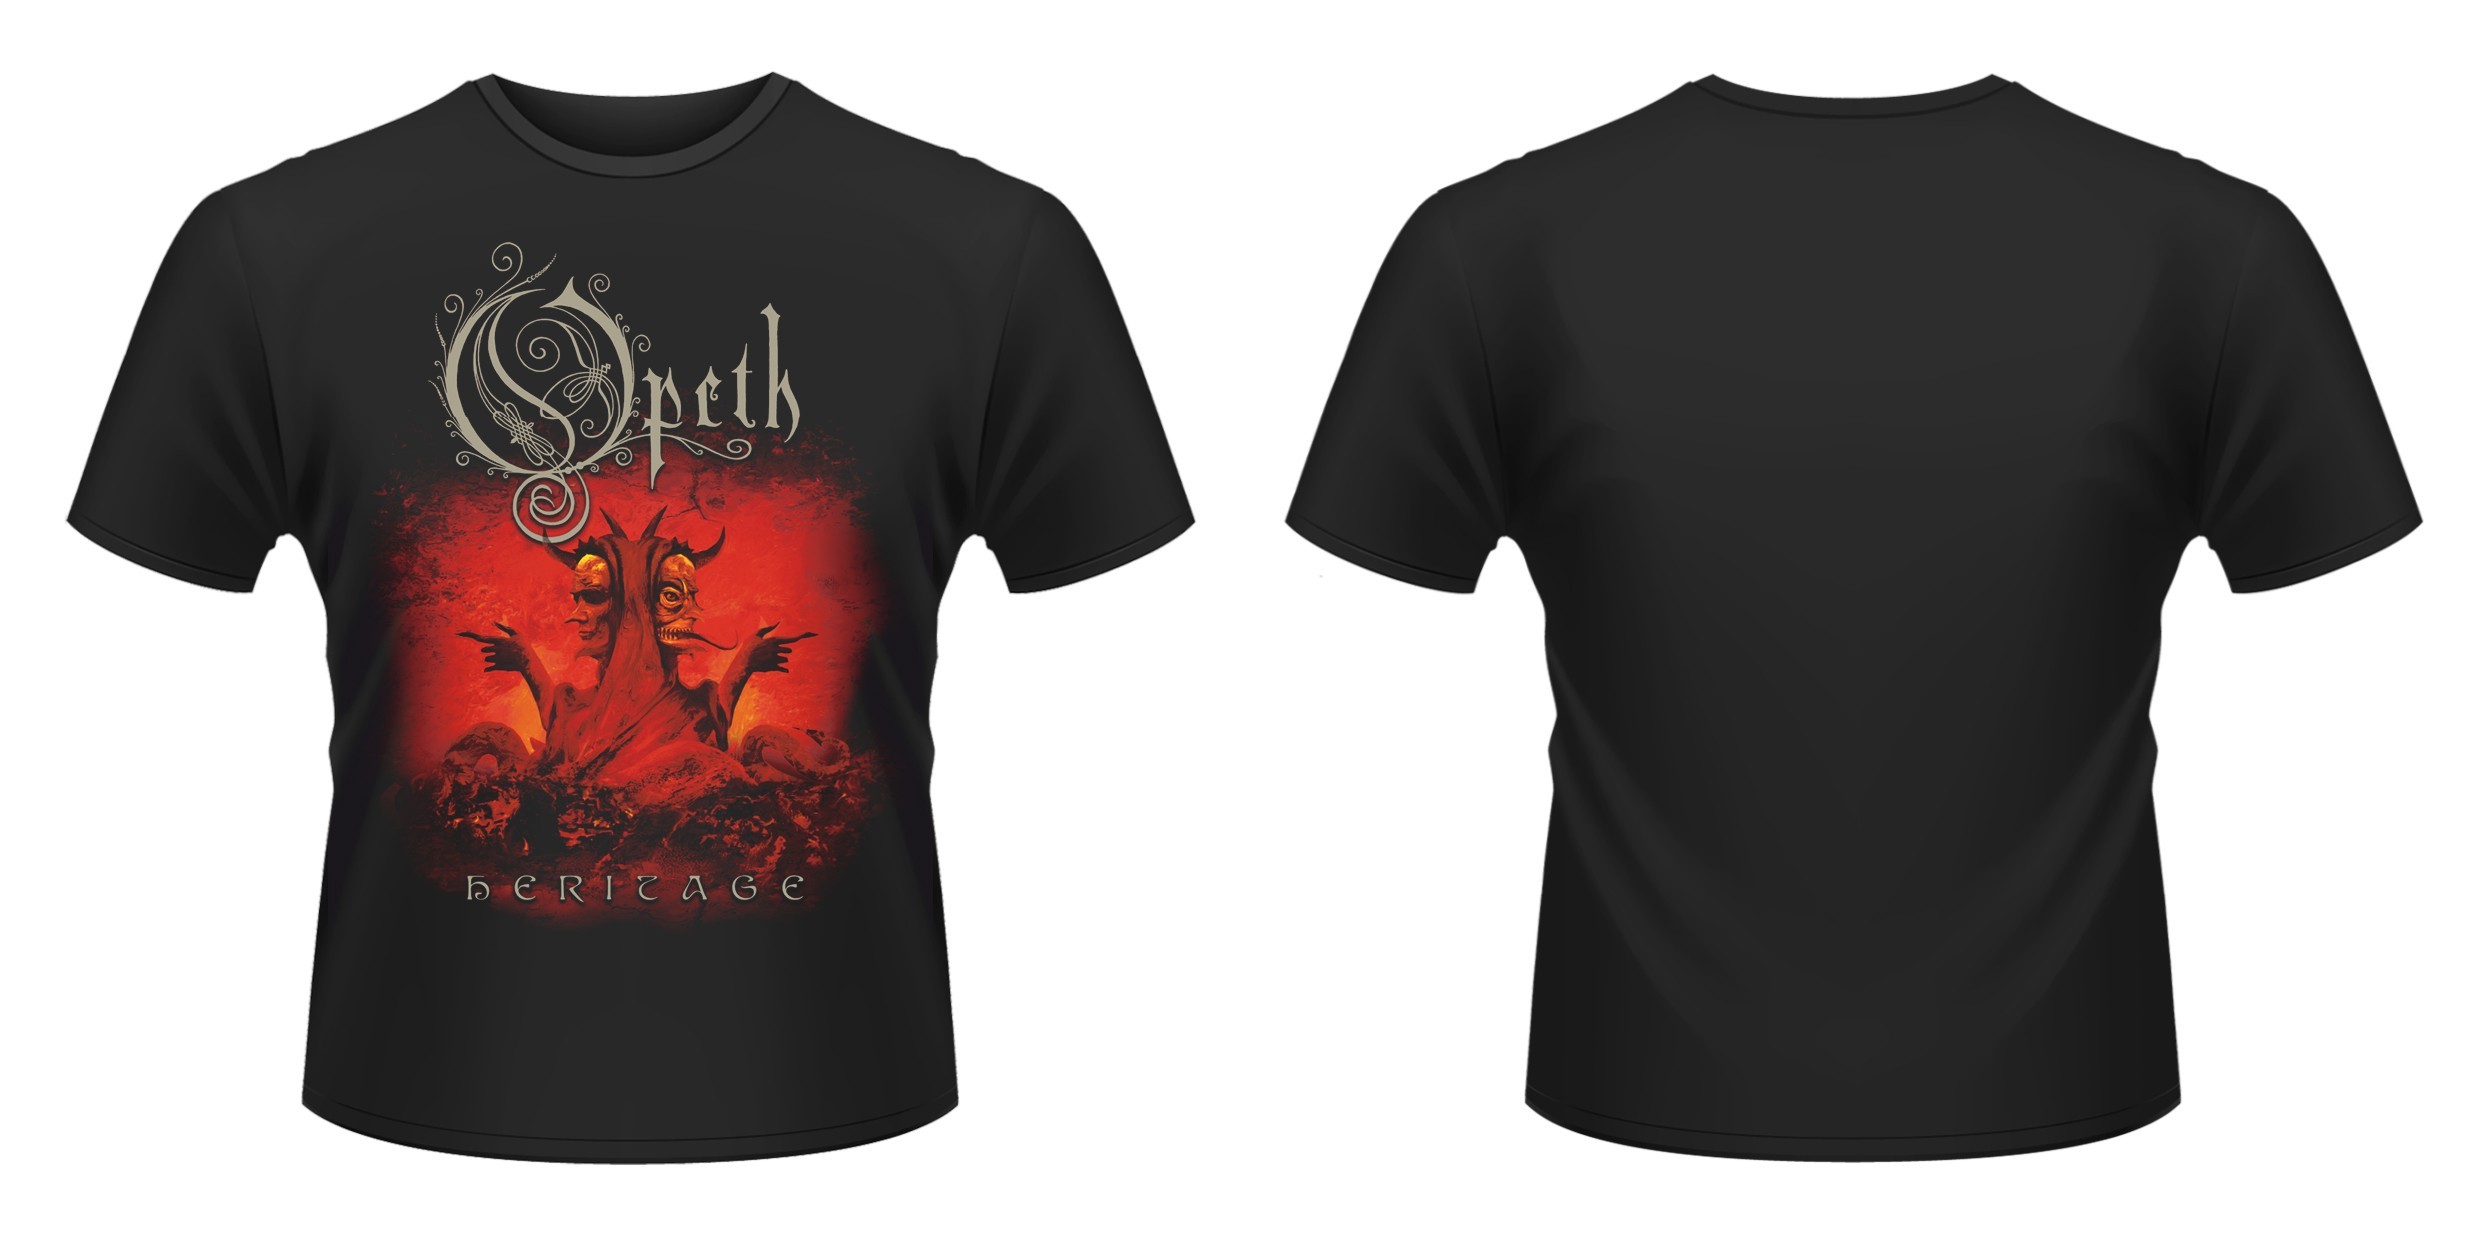 Opeth - Heritage
  - S